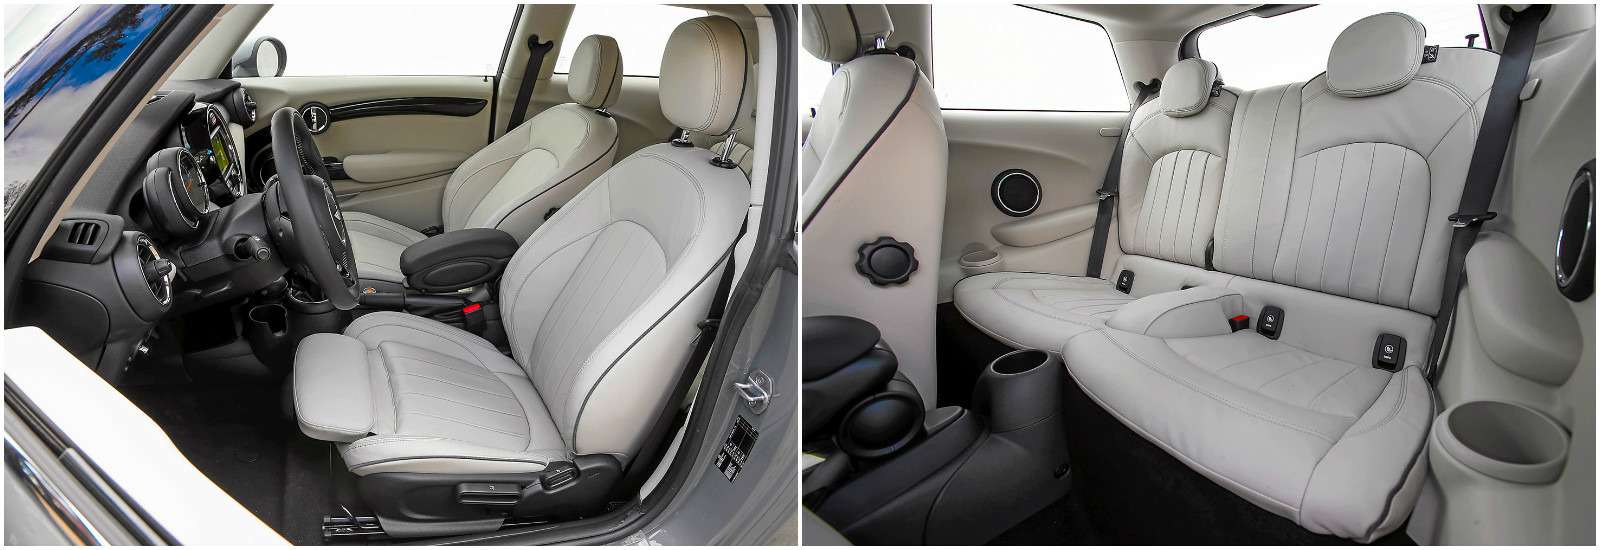 Toyota Prius, DS 4 Crossback, Mini Cooper — тест на экономичность — фото 764963